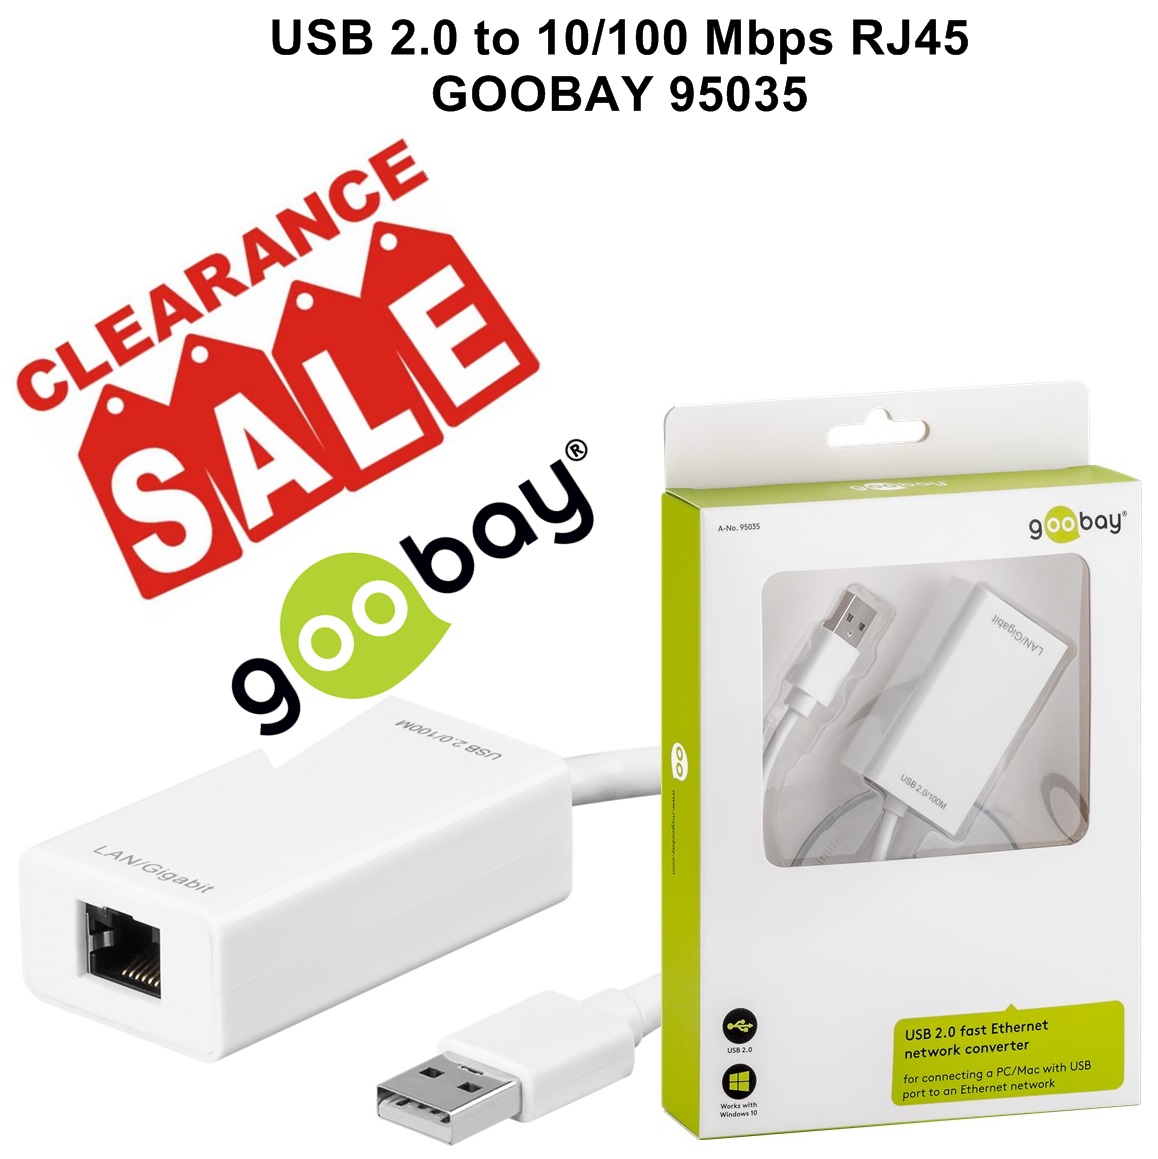 USB 2.0 to 10/100 Mbps RJ45 GOOBAY 95035